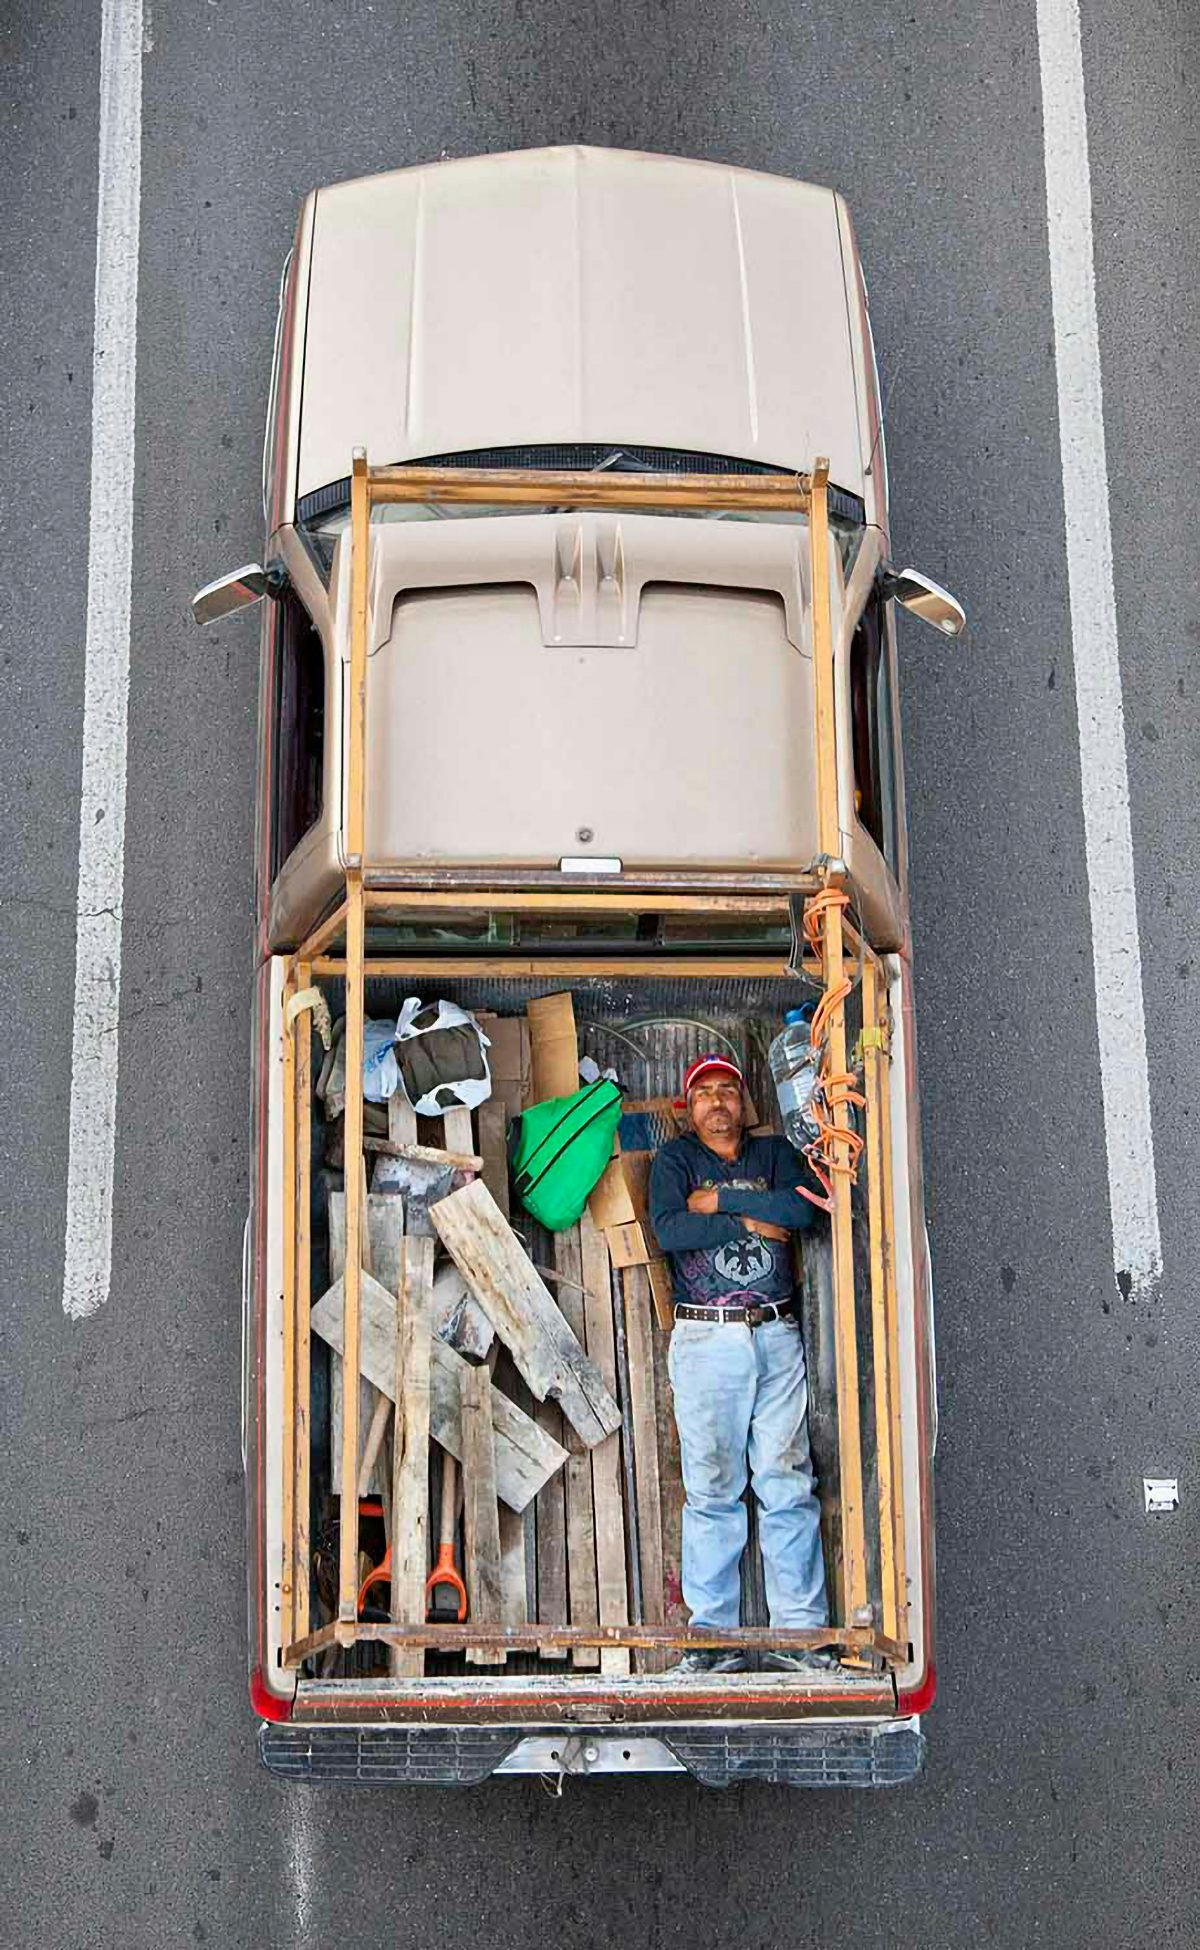 Alejandro Cartagena image of carpoolers in King's Cross exhibition